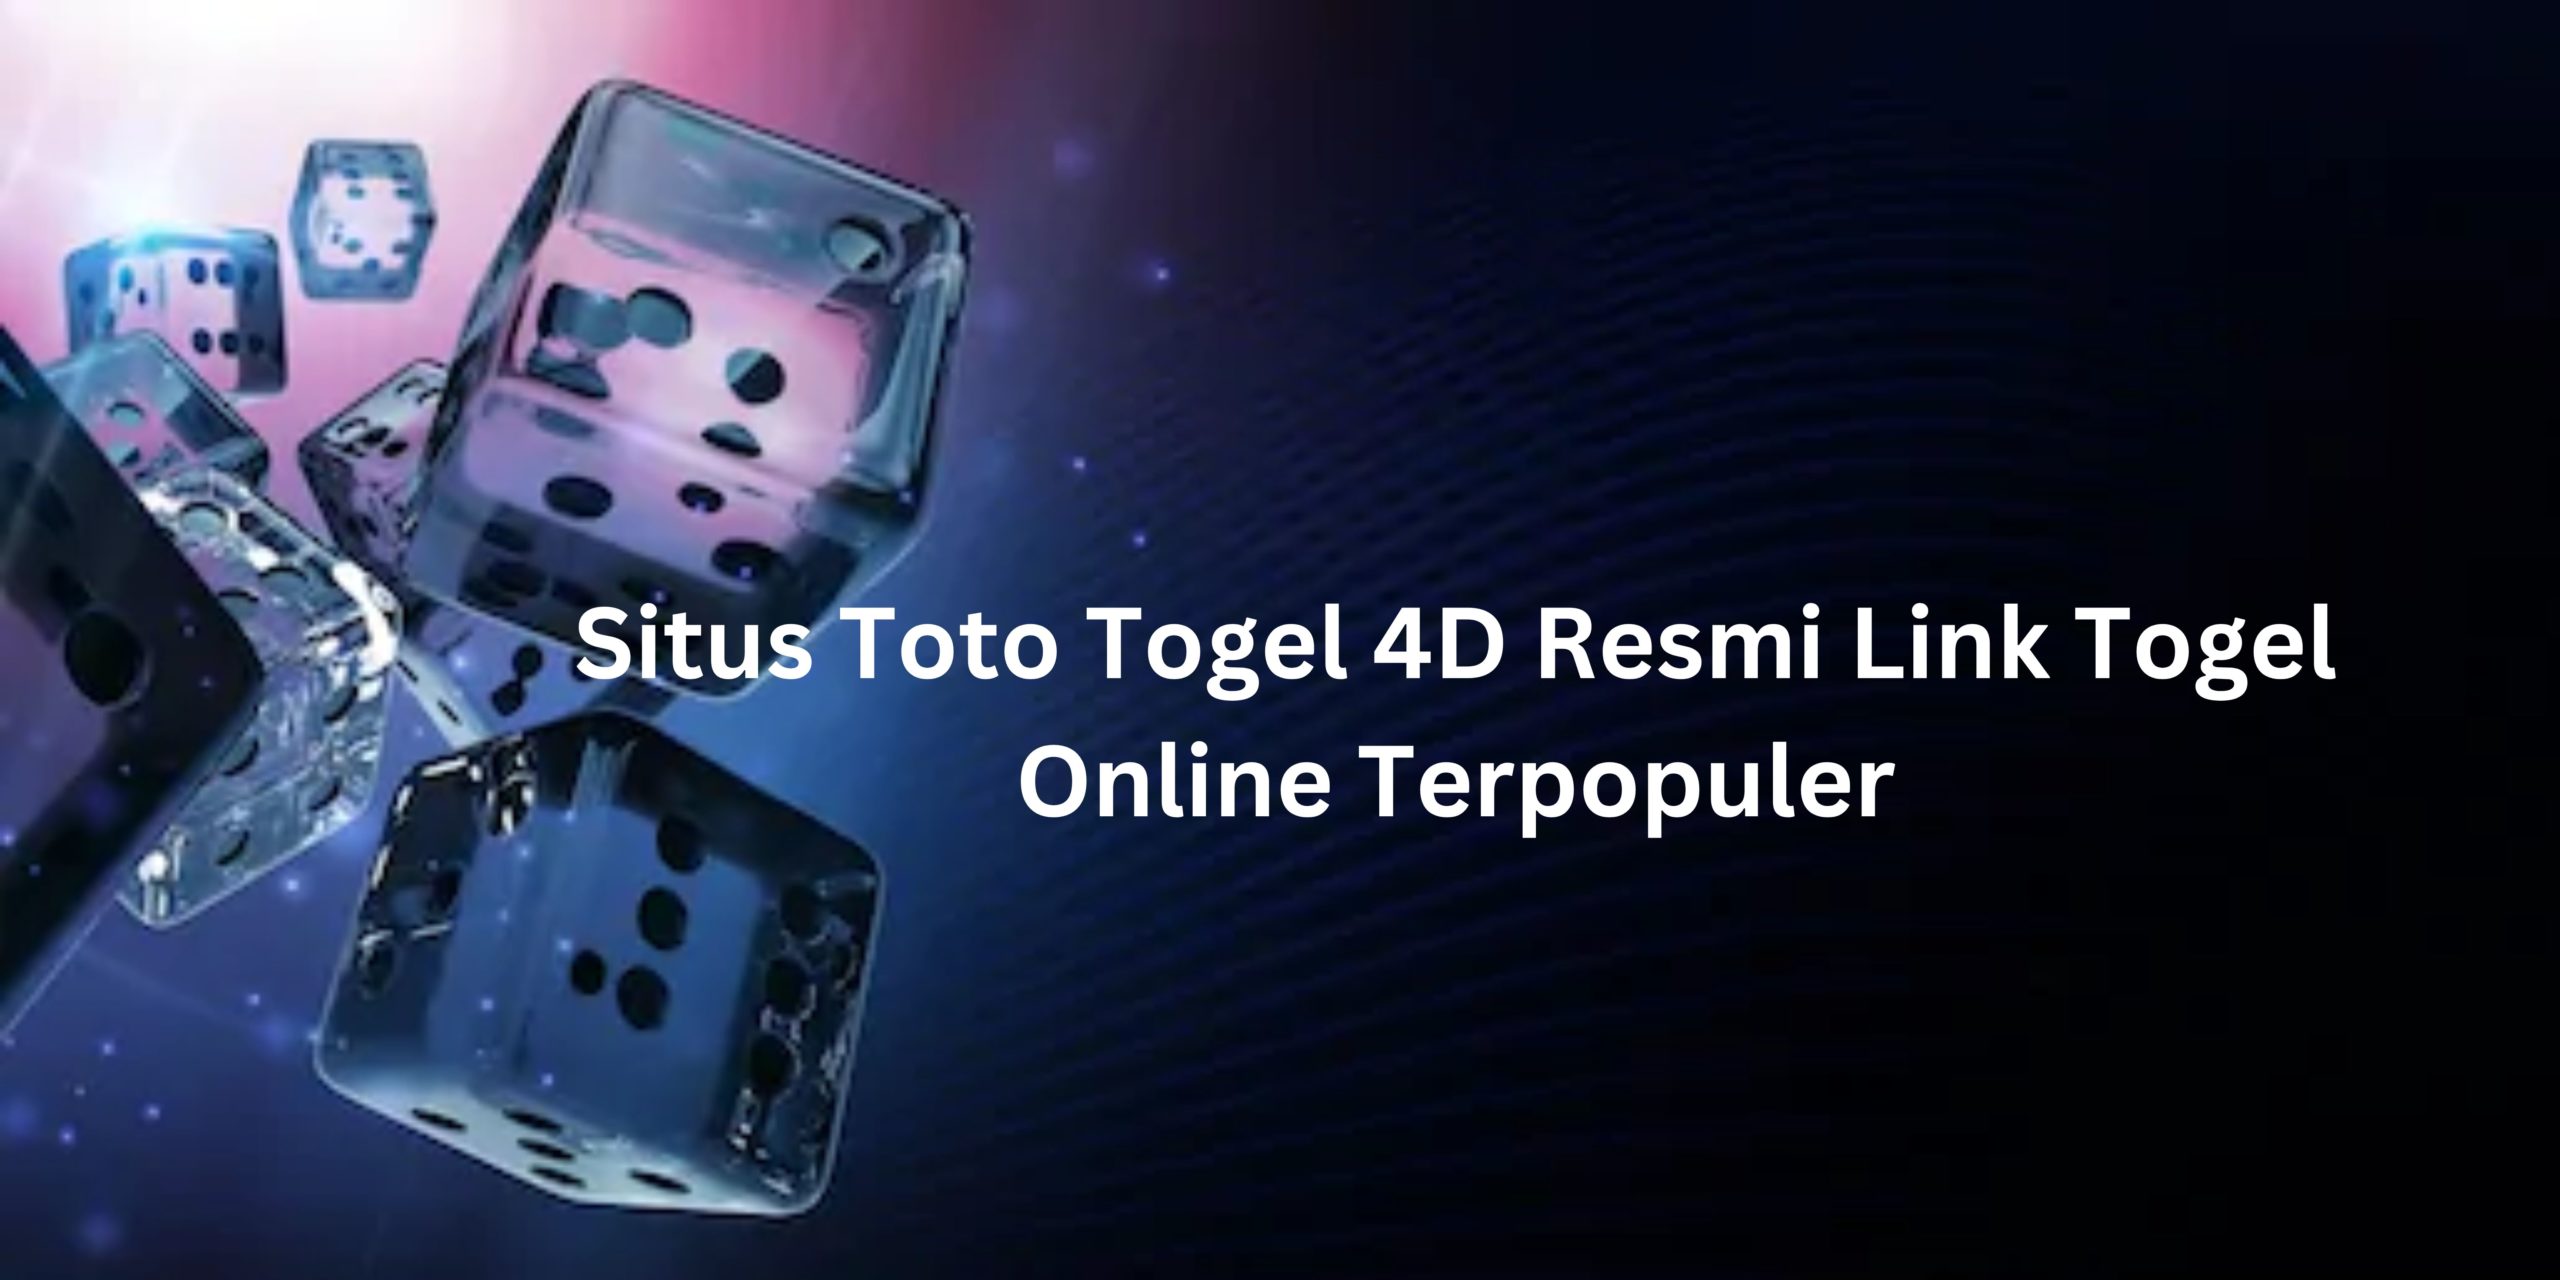 Situs Toto Togel 4D Resmi Link Togel Online Terpopuler